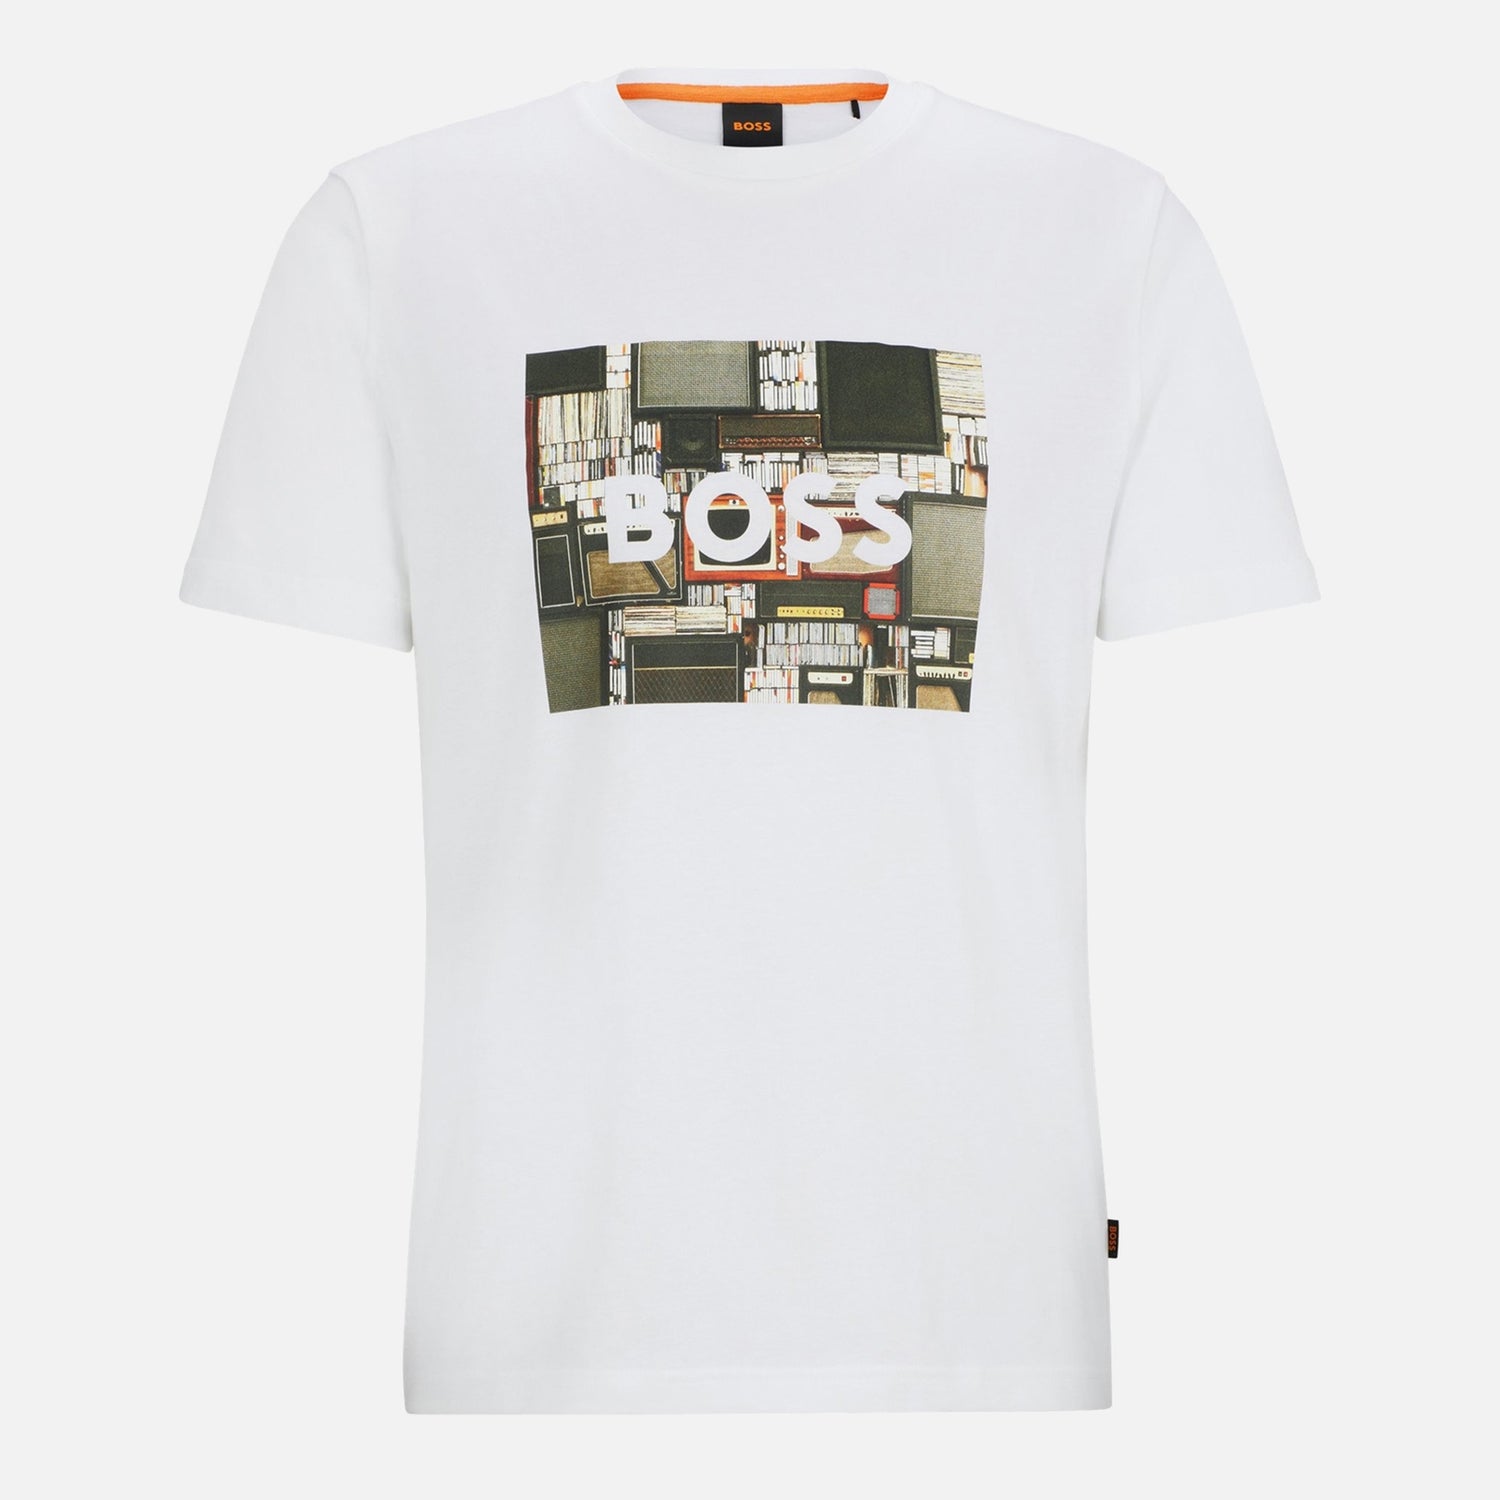 Boss Orange Heavy Boss Cotton-Jersey T-Shirt - S